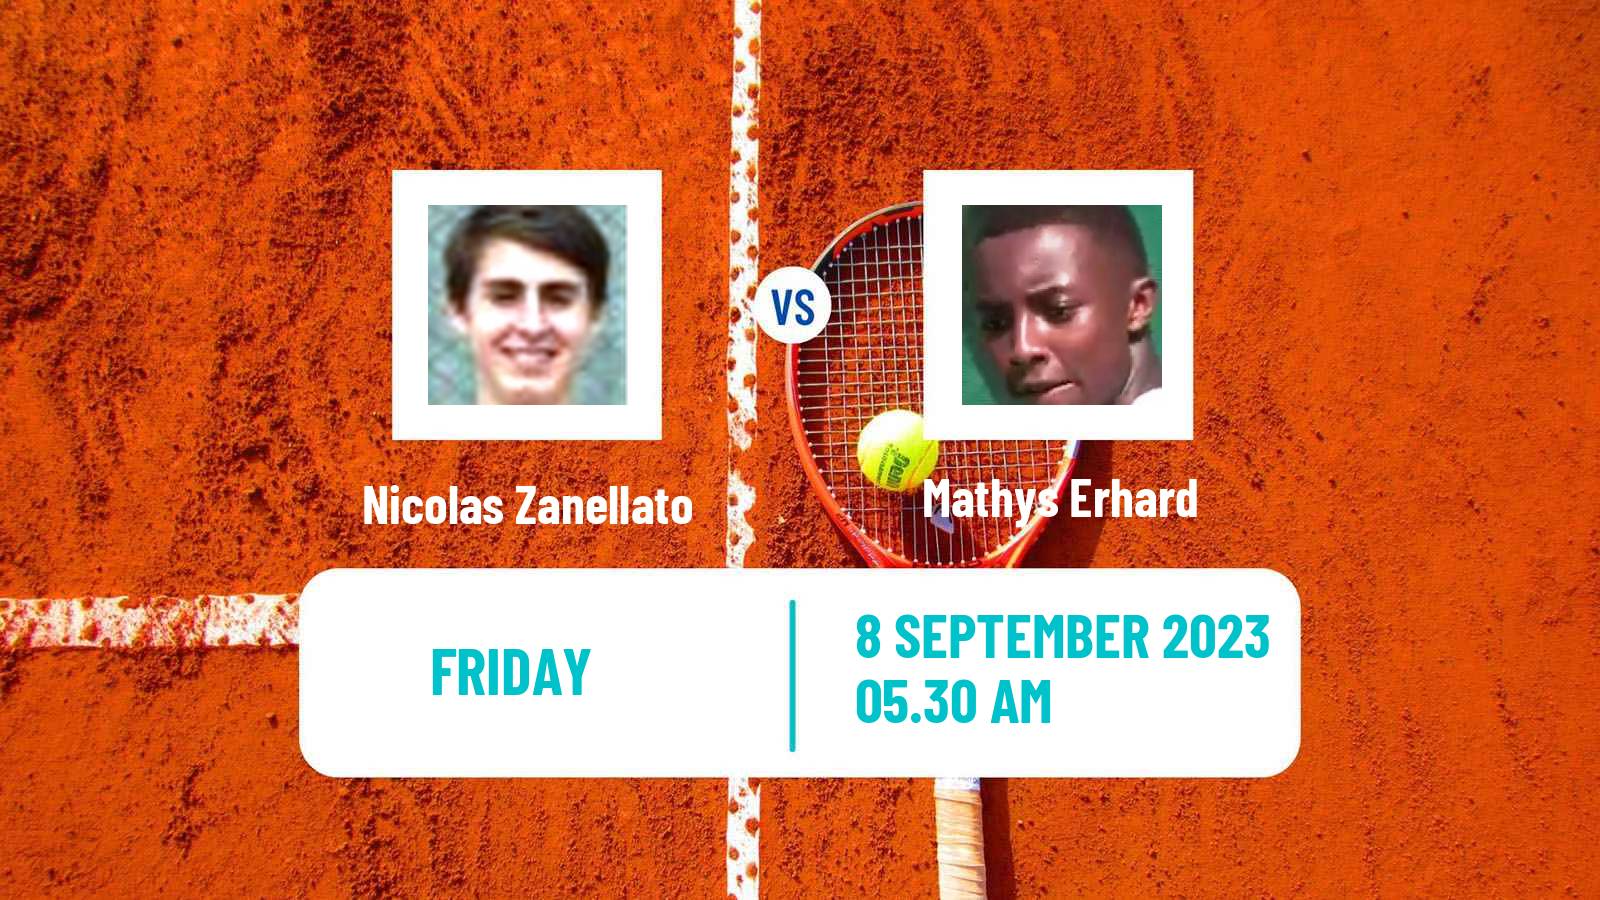 Tennis ITF M25 MarIBOr 2 Men Nicolas Zanellato - Mathys Erhard